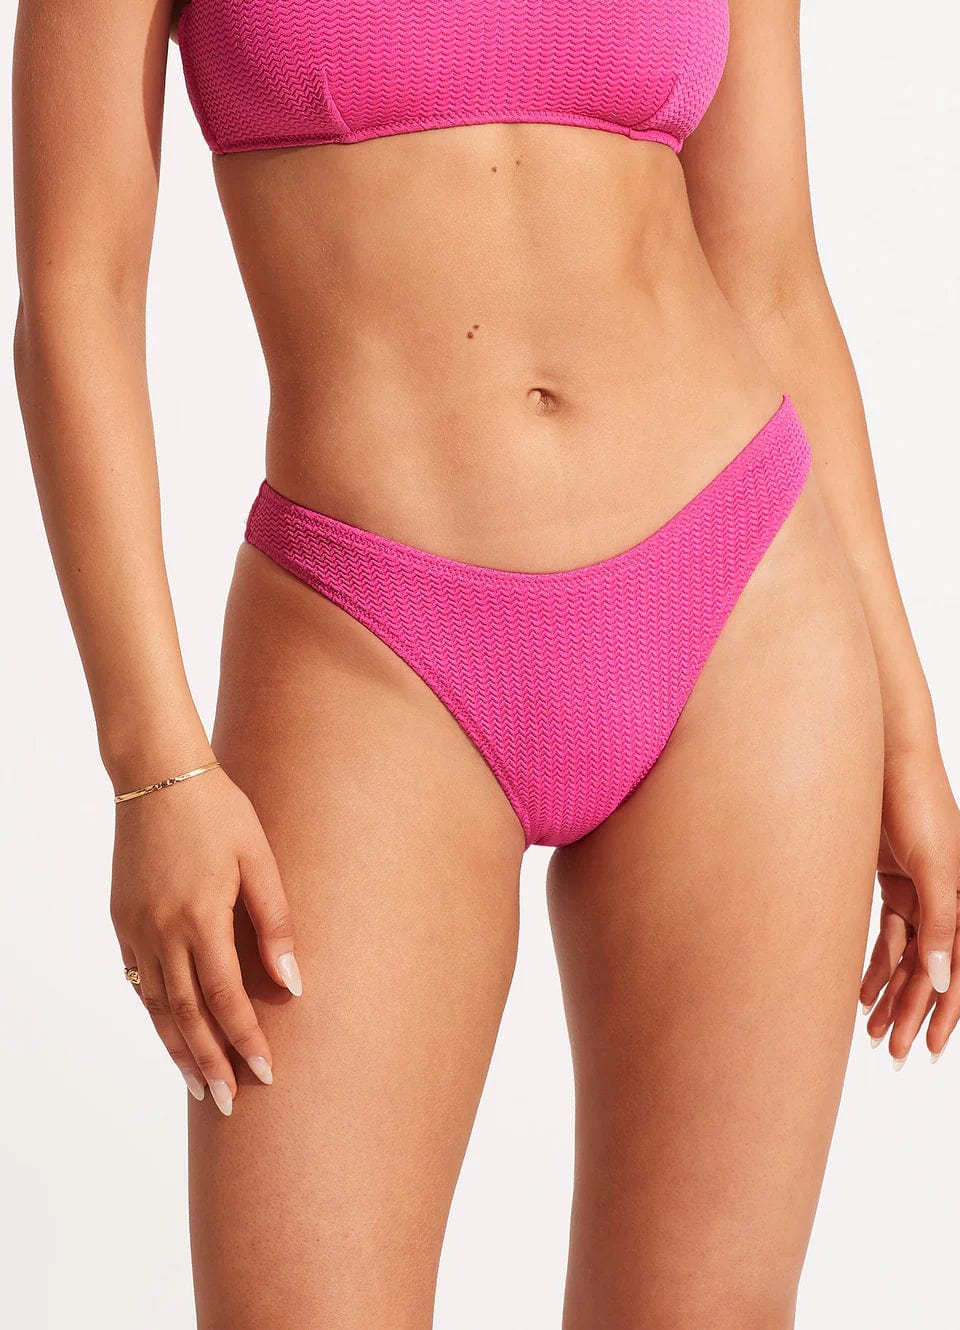 Sea Dive High Cut Pant - Fuchsia Rose - Seafolly - Splash Swimwear  - bikini bottoms, June23, Seafolly, Womens, womens swim - Splash Swimwear 